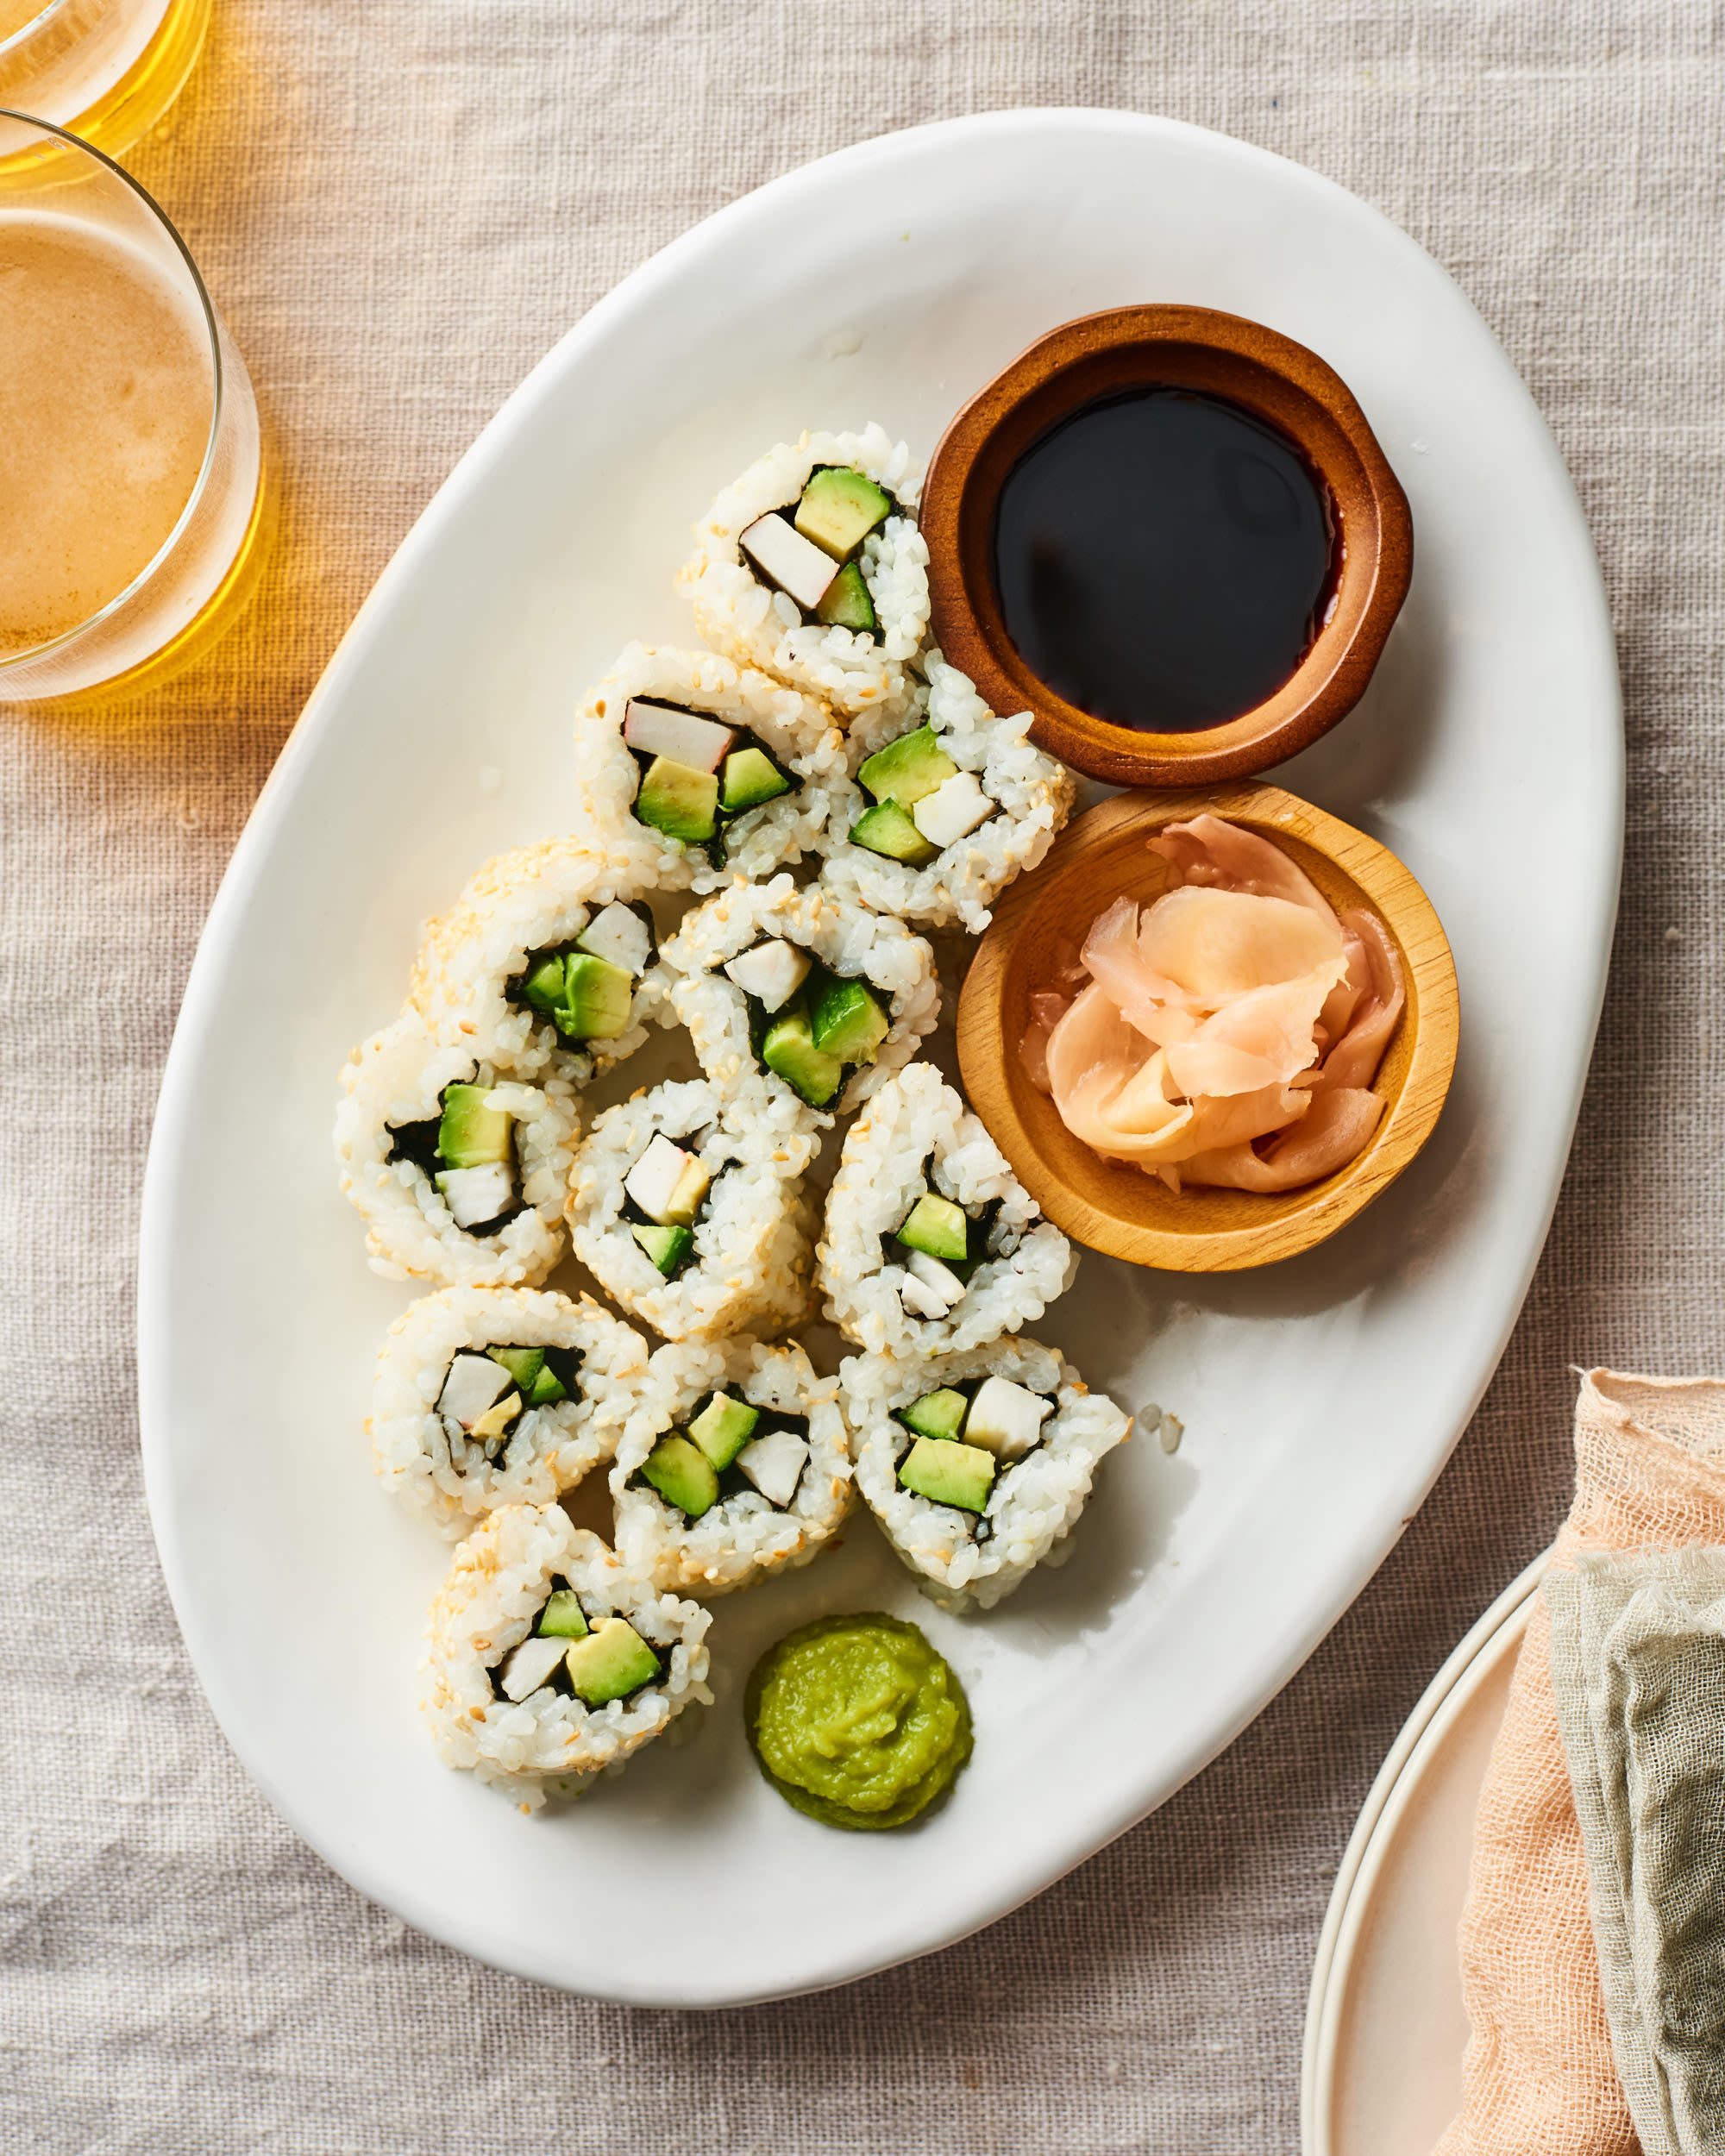 Kids Sushi Recipe: Easy Avocado Rolls - Kids Eat in Color